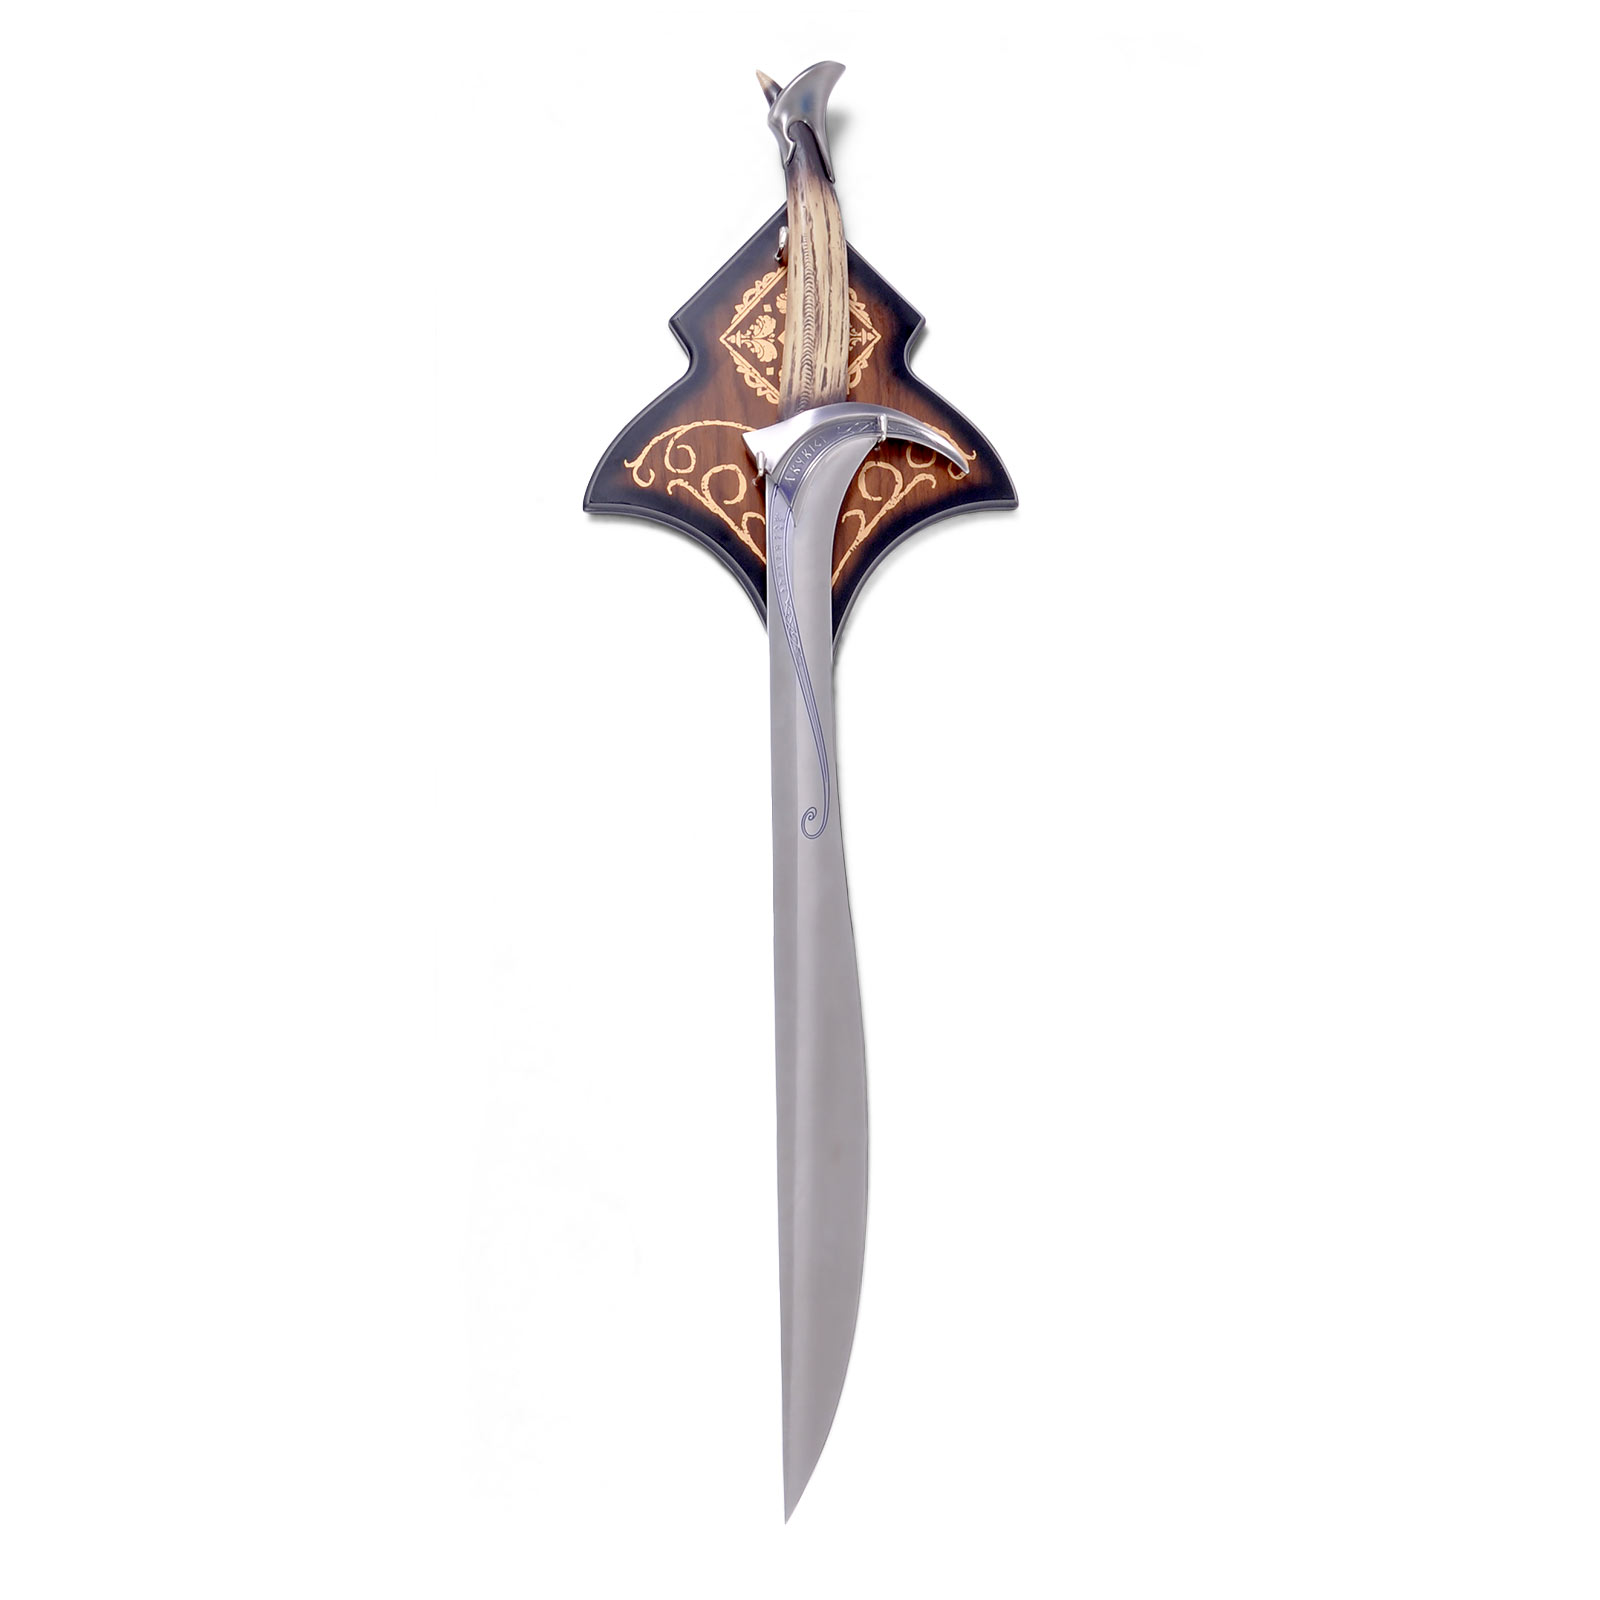 Thorin's Sword - Orcrist